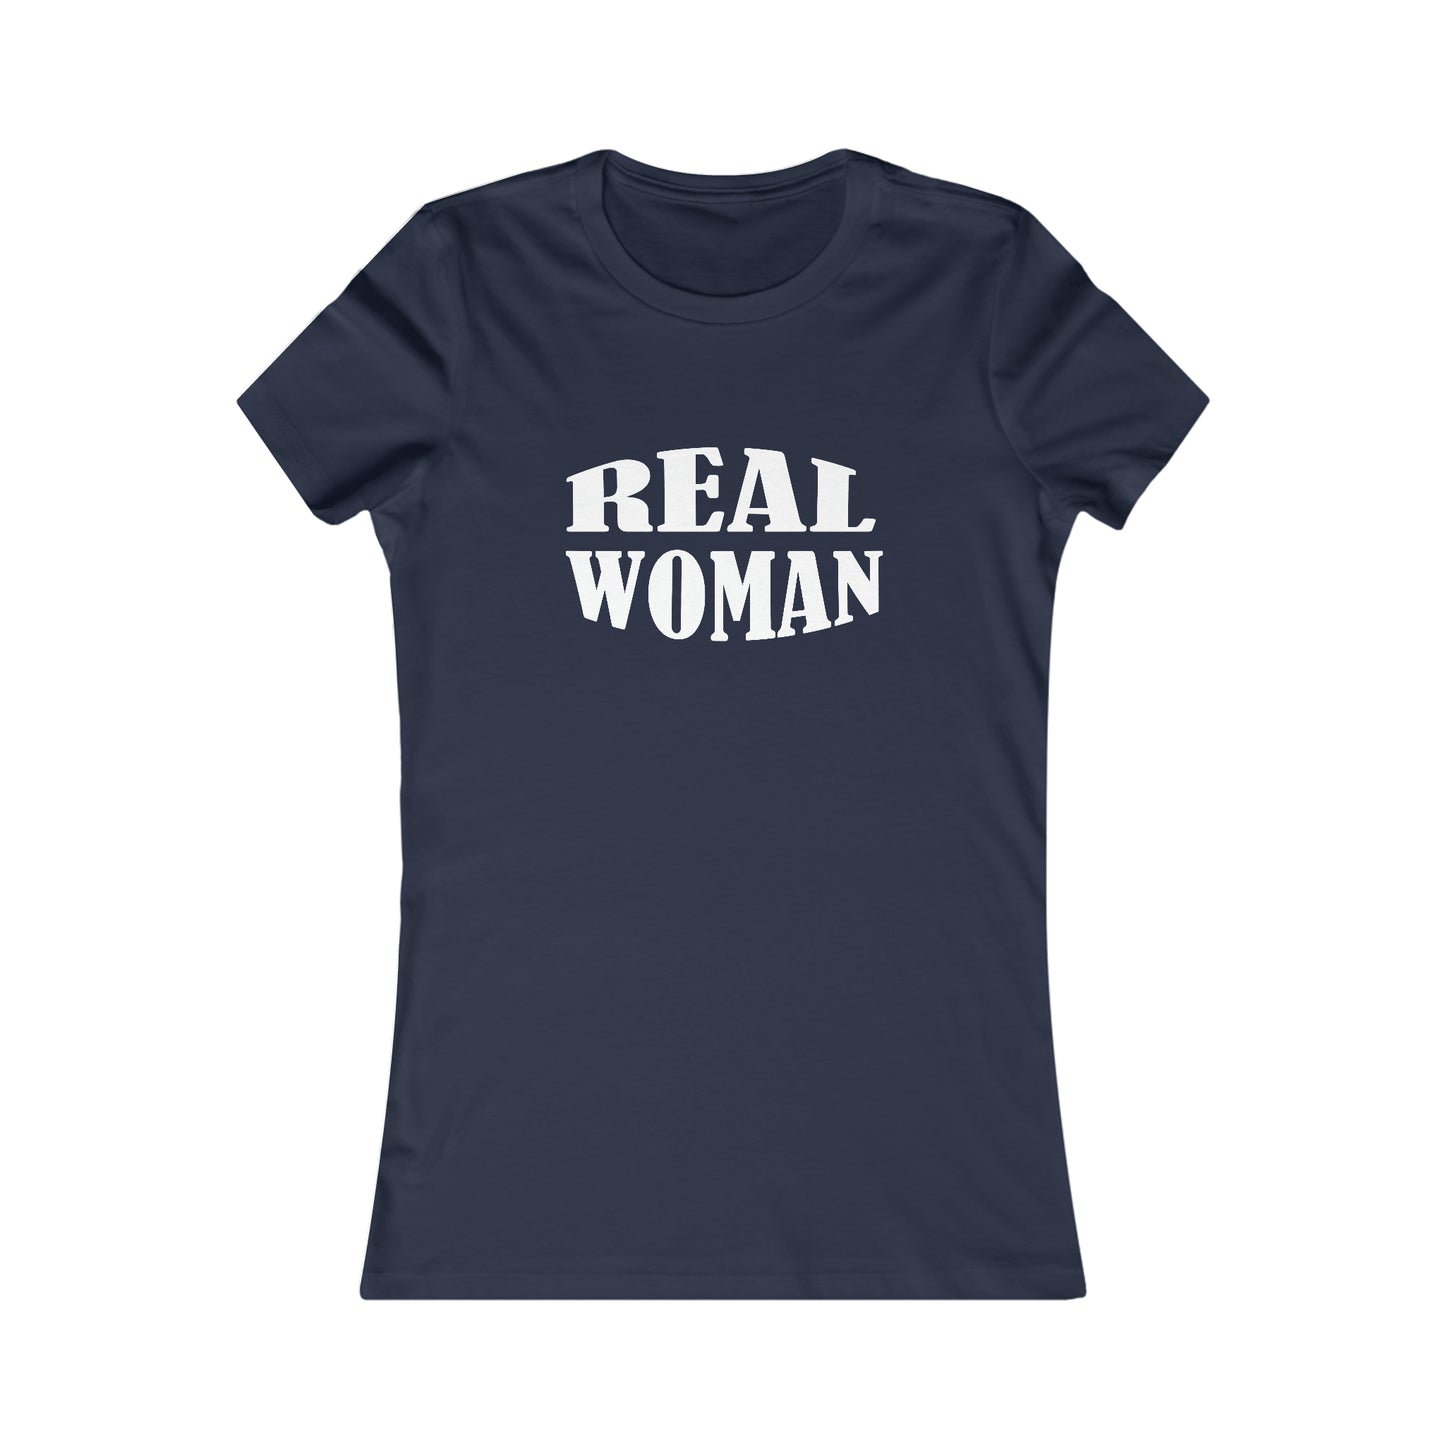 Real Woman T-Shirt For Genuine Woman TShirt For Natural Born Woman T Shirt For Female Shirt For Inspirational Gift